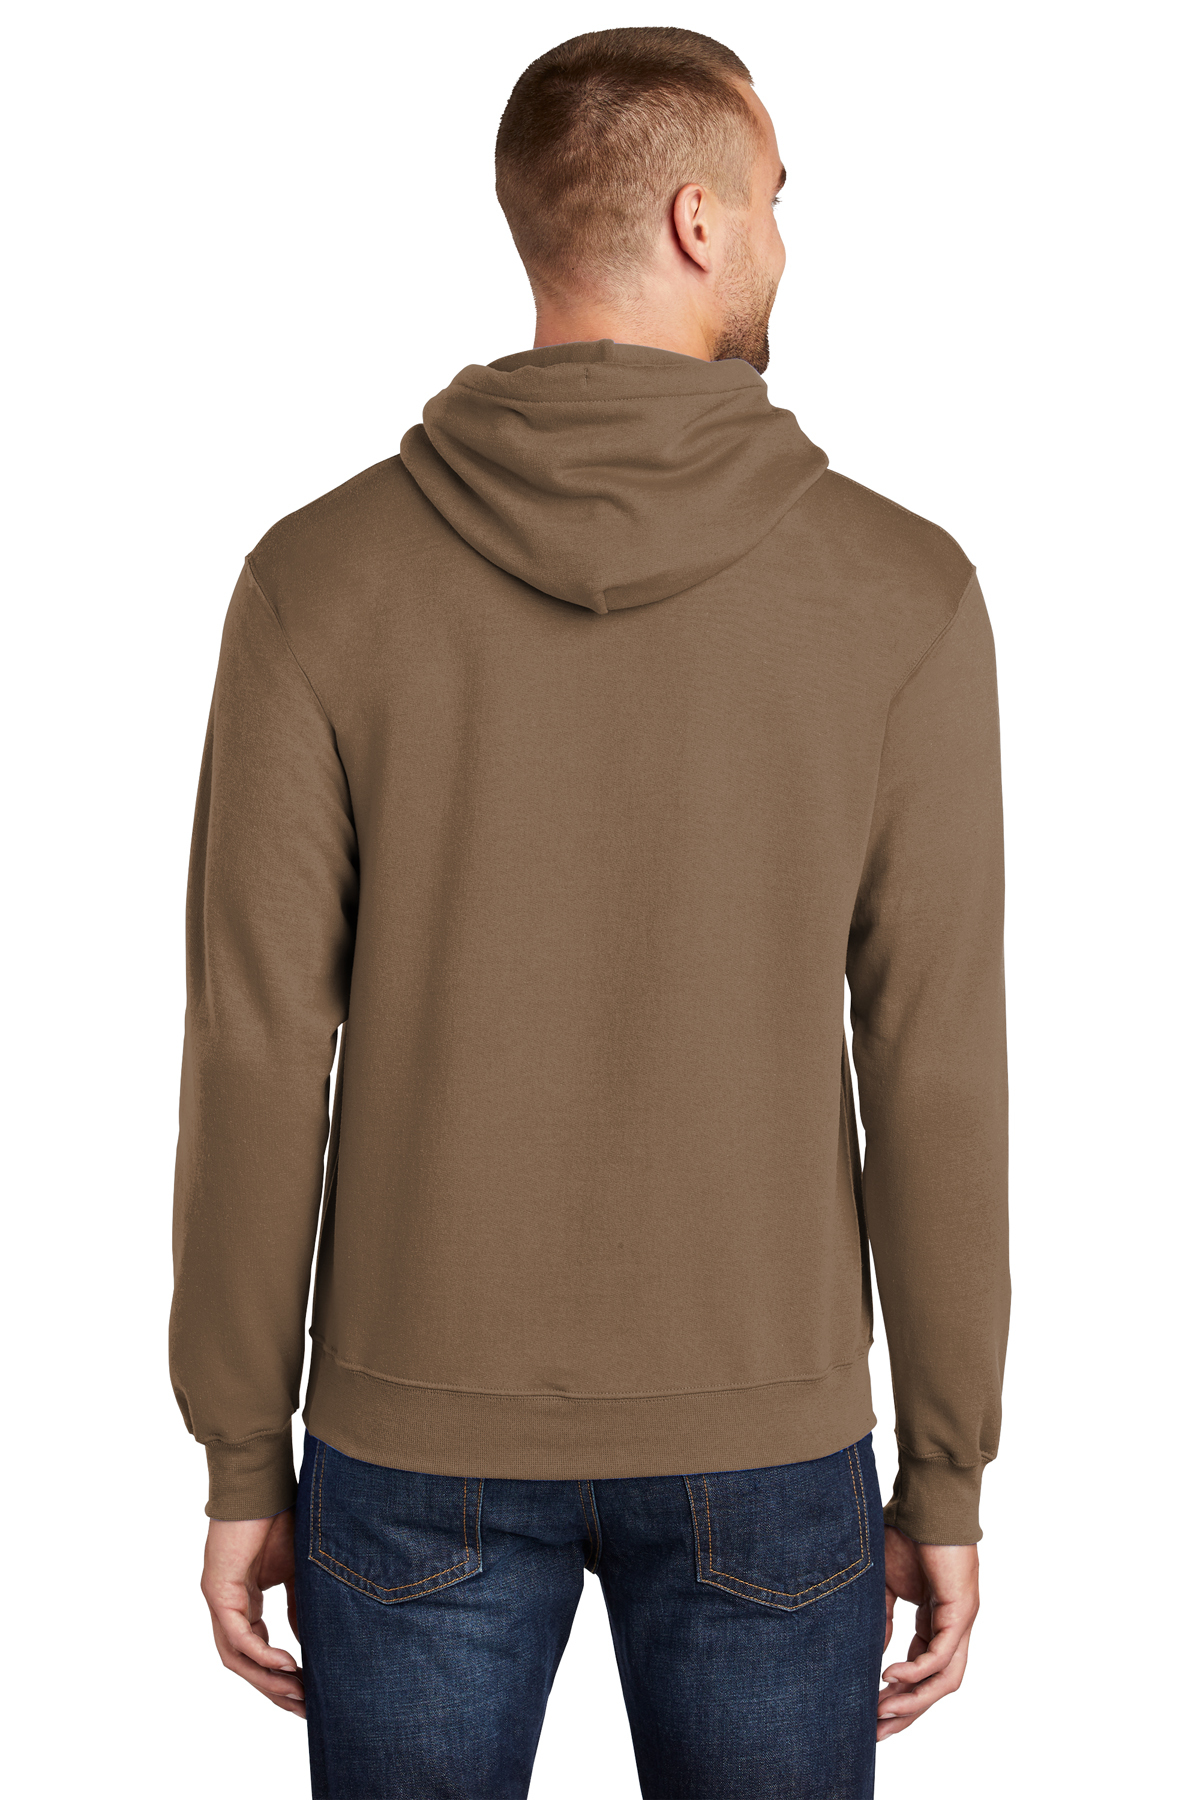 Port & Company Core Fleece Pullover Product | Sweatshirt SanMar | Hooded